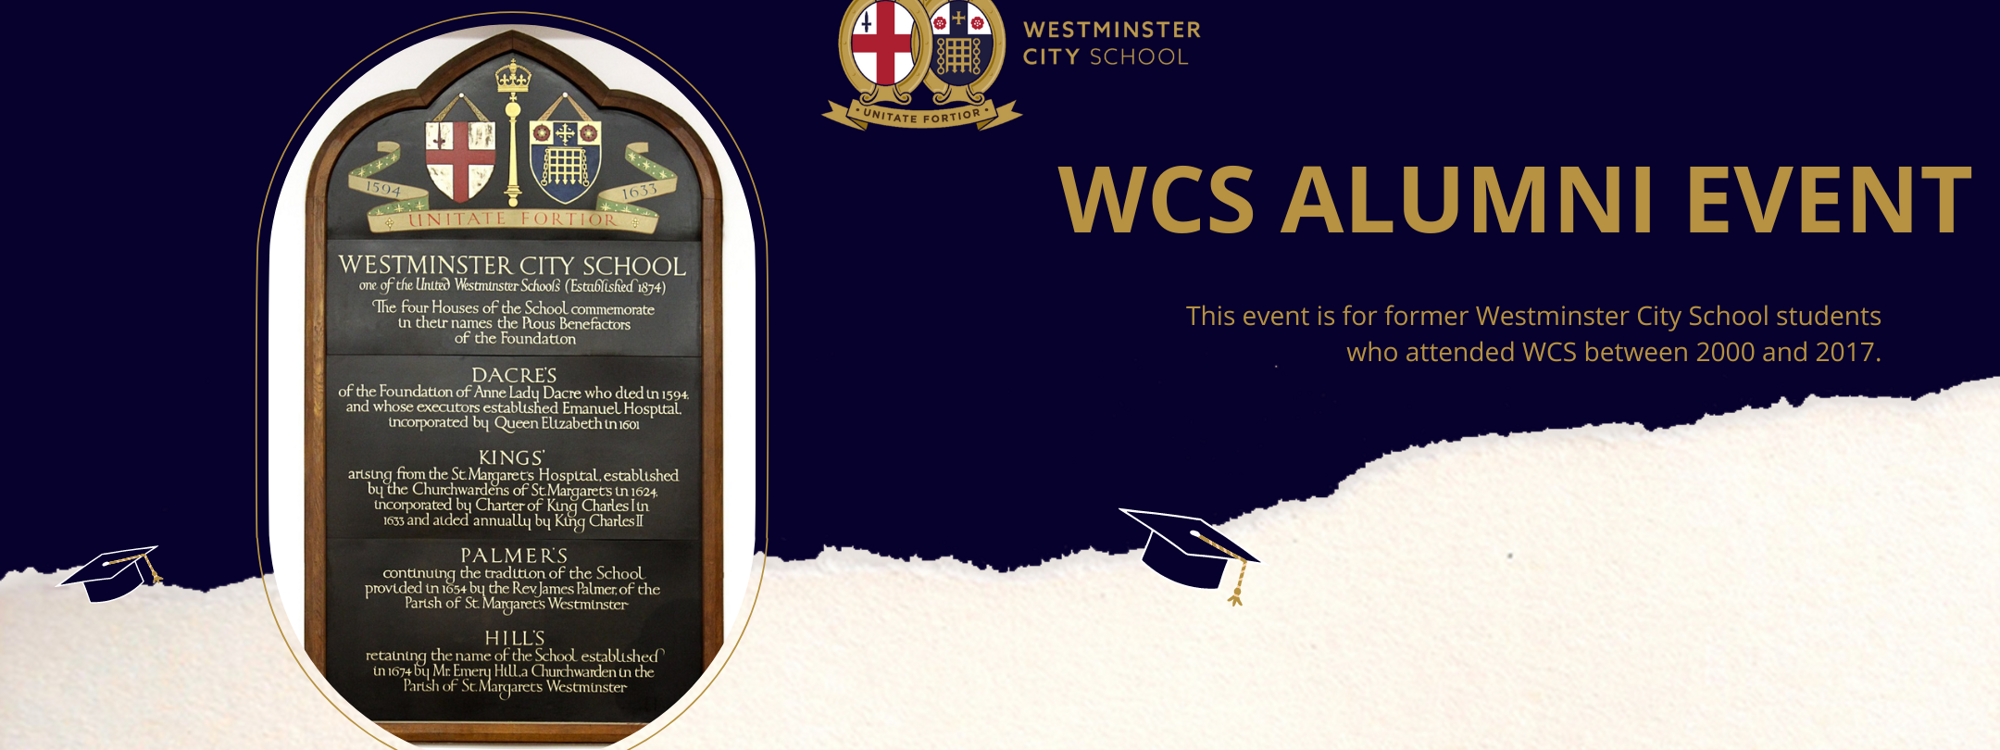 WCS Alumni event